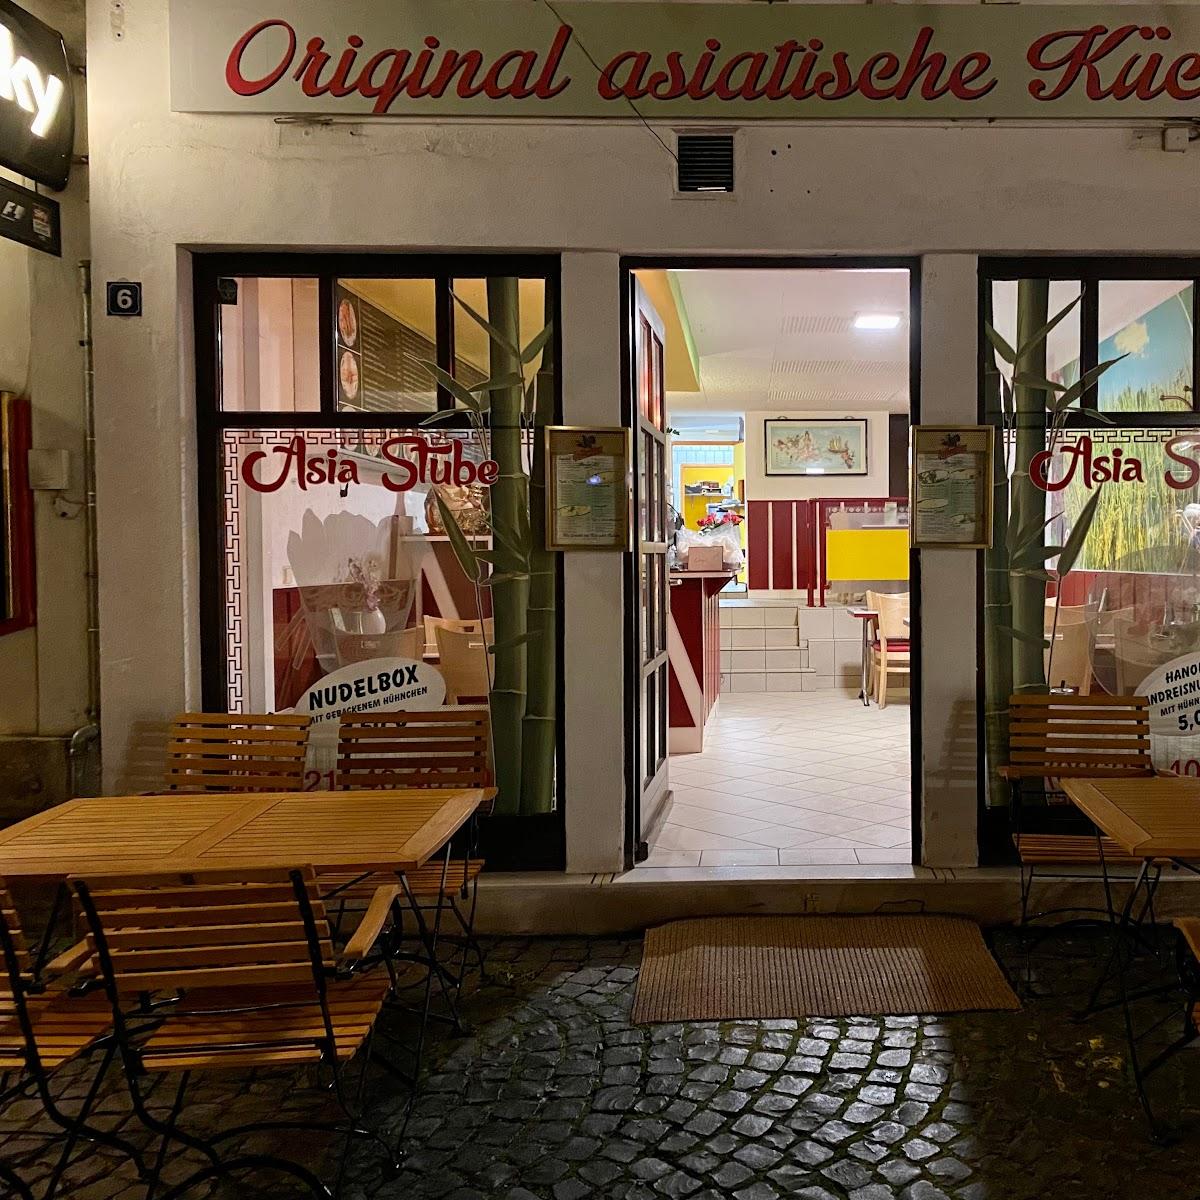 Restaurant "Asia Stube" in Gotha